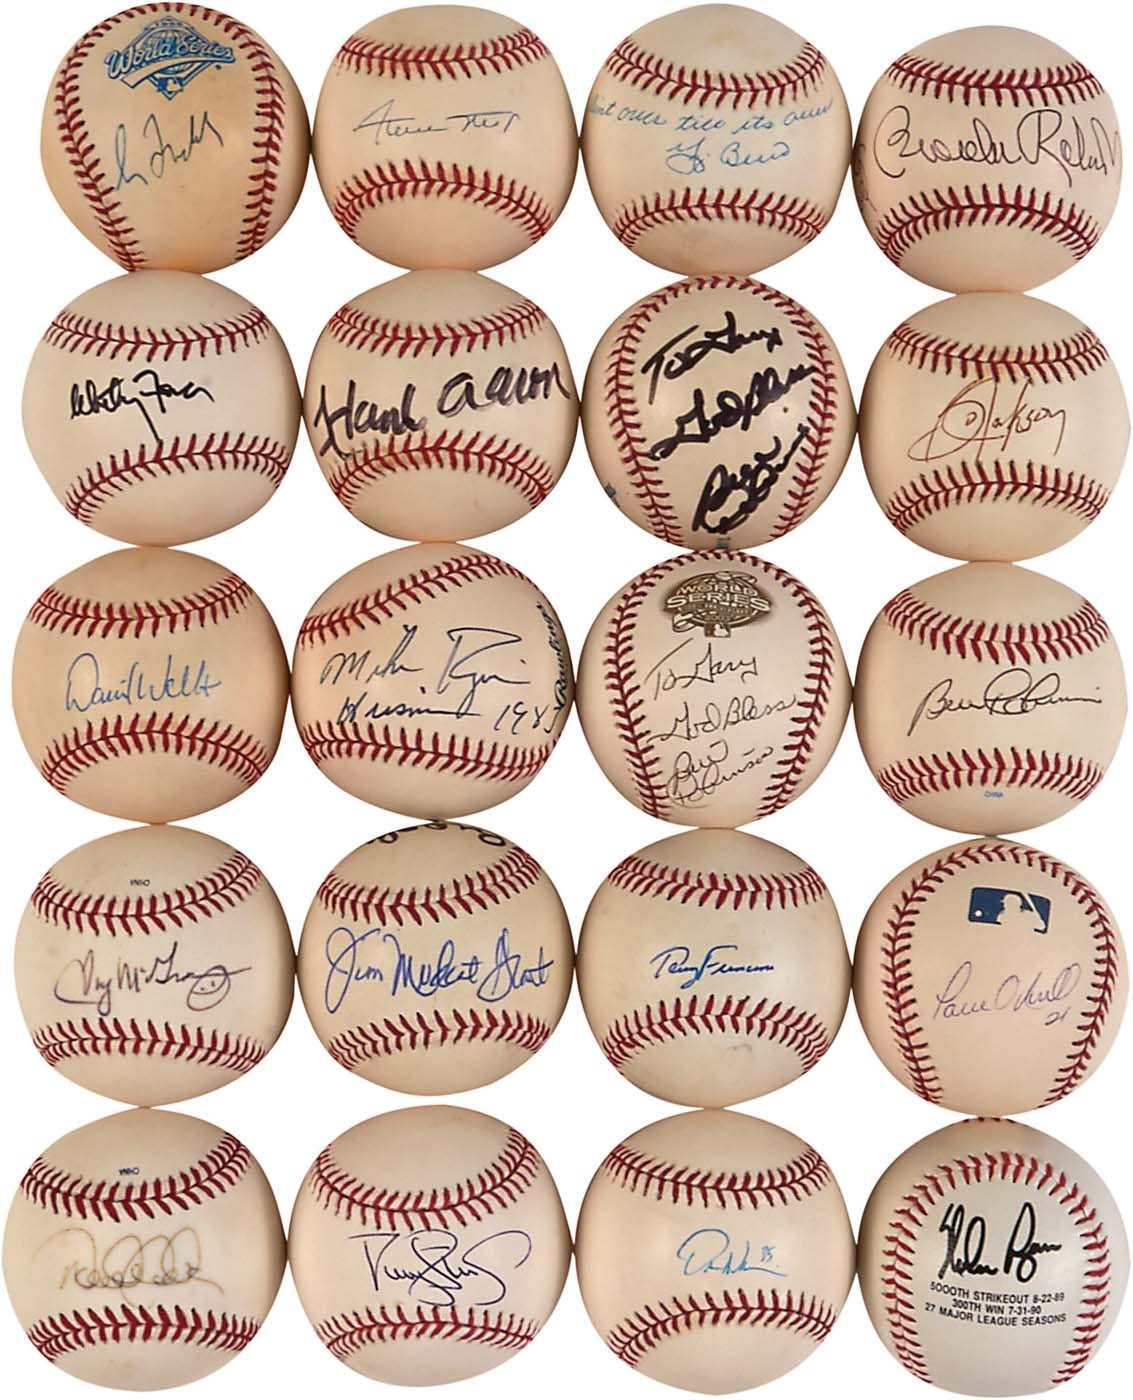 - Baseball Legends and Stars Signed Baseballs & Bats w/Derek Jeter (25)